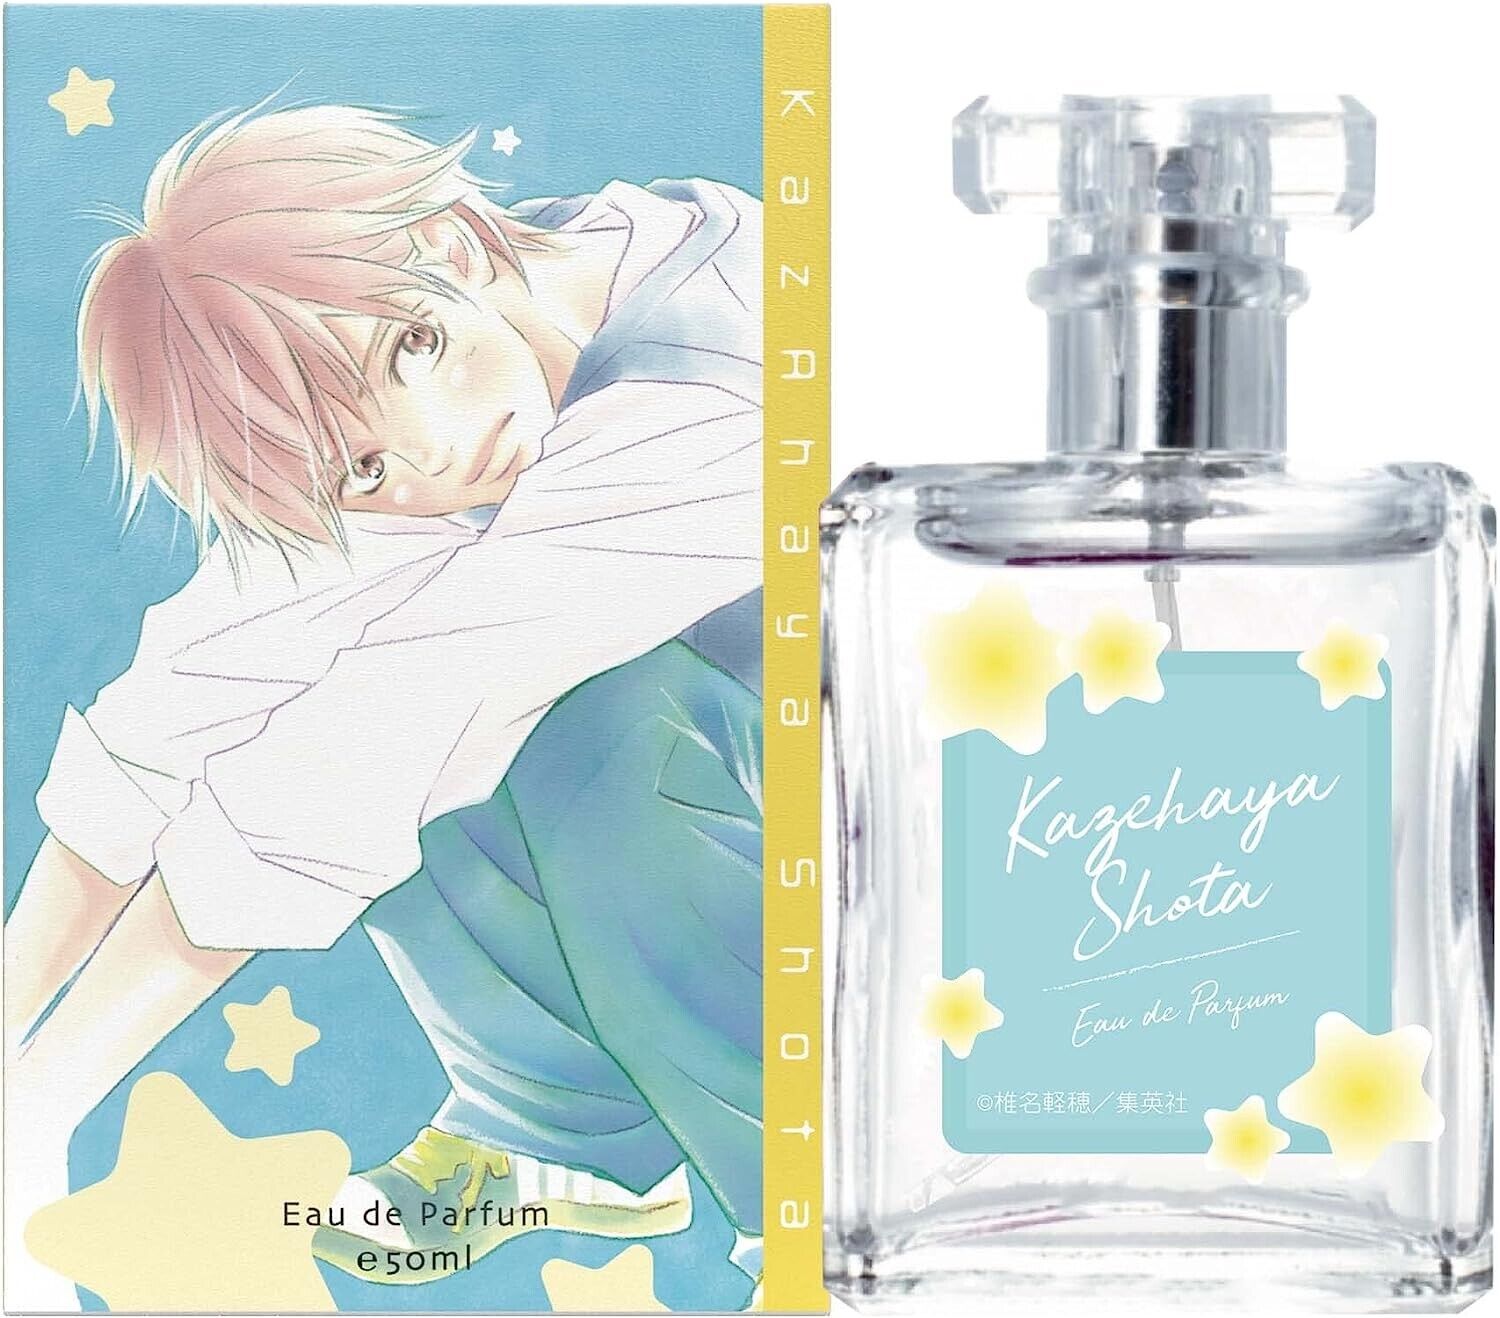 Kimi ni Todoke From Me to You KAZAHAYA SHOTA Fragrance 50ml perfume cologne